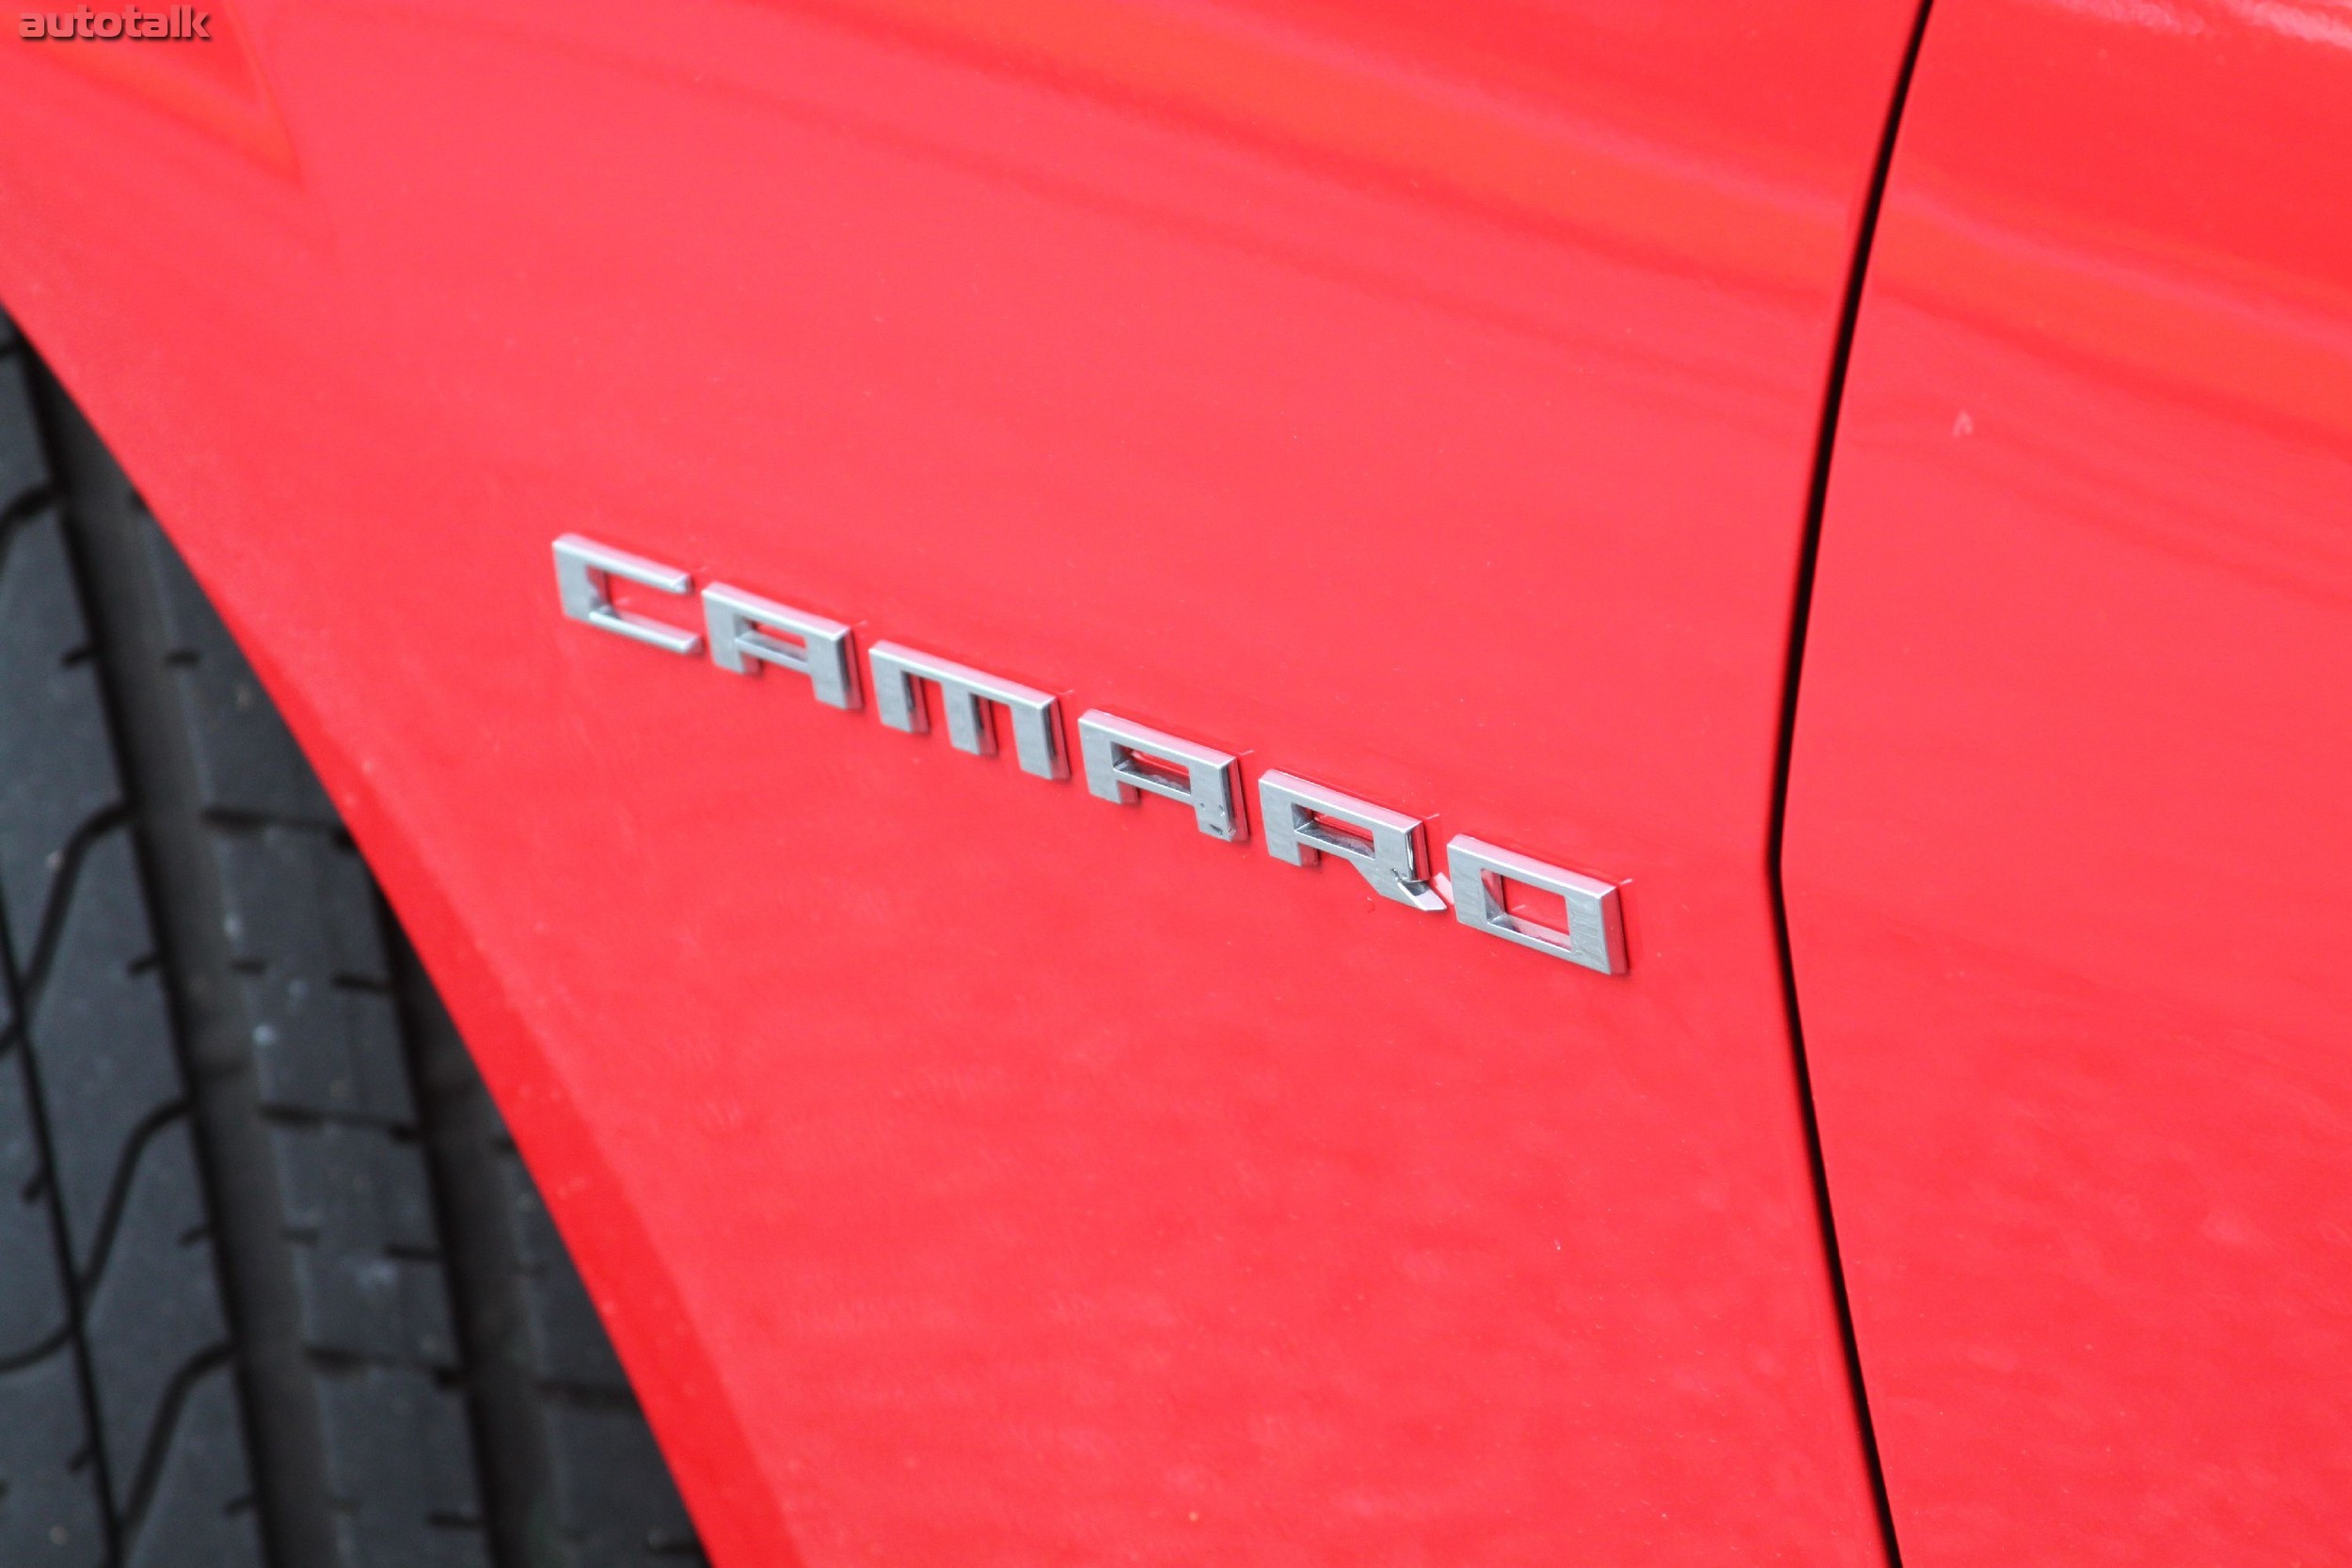 2011 Chevrolet Camaro Convertible Review